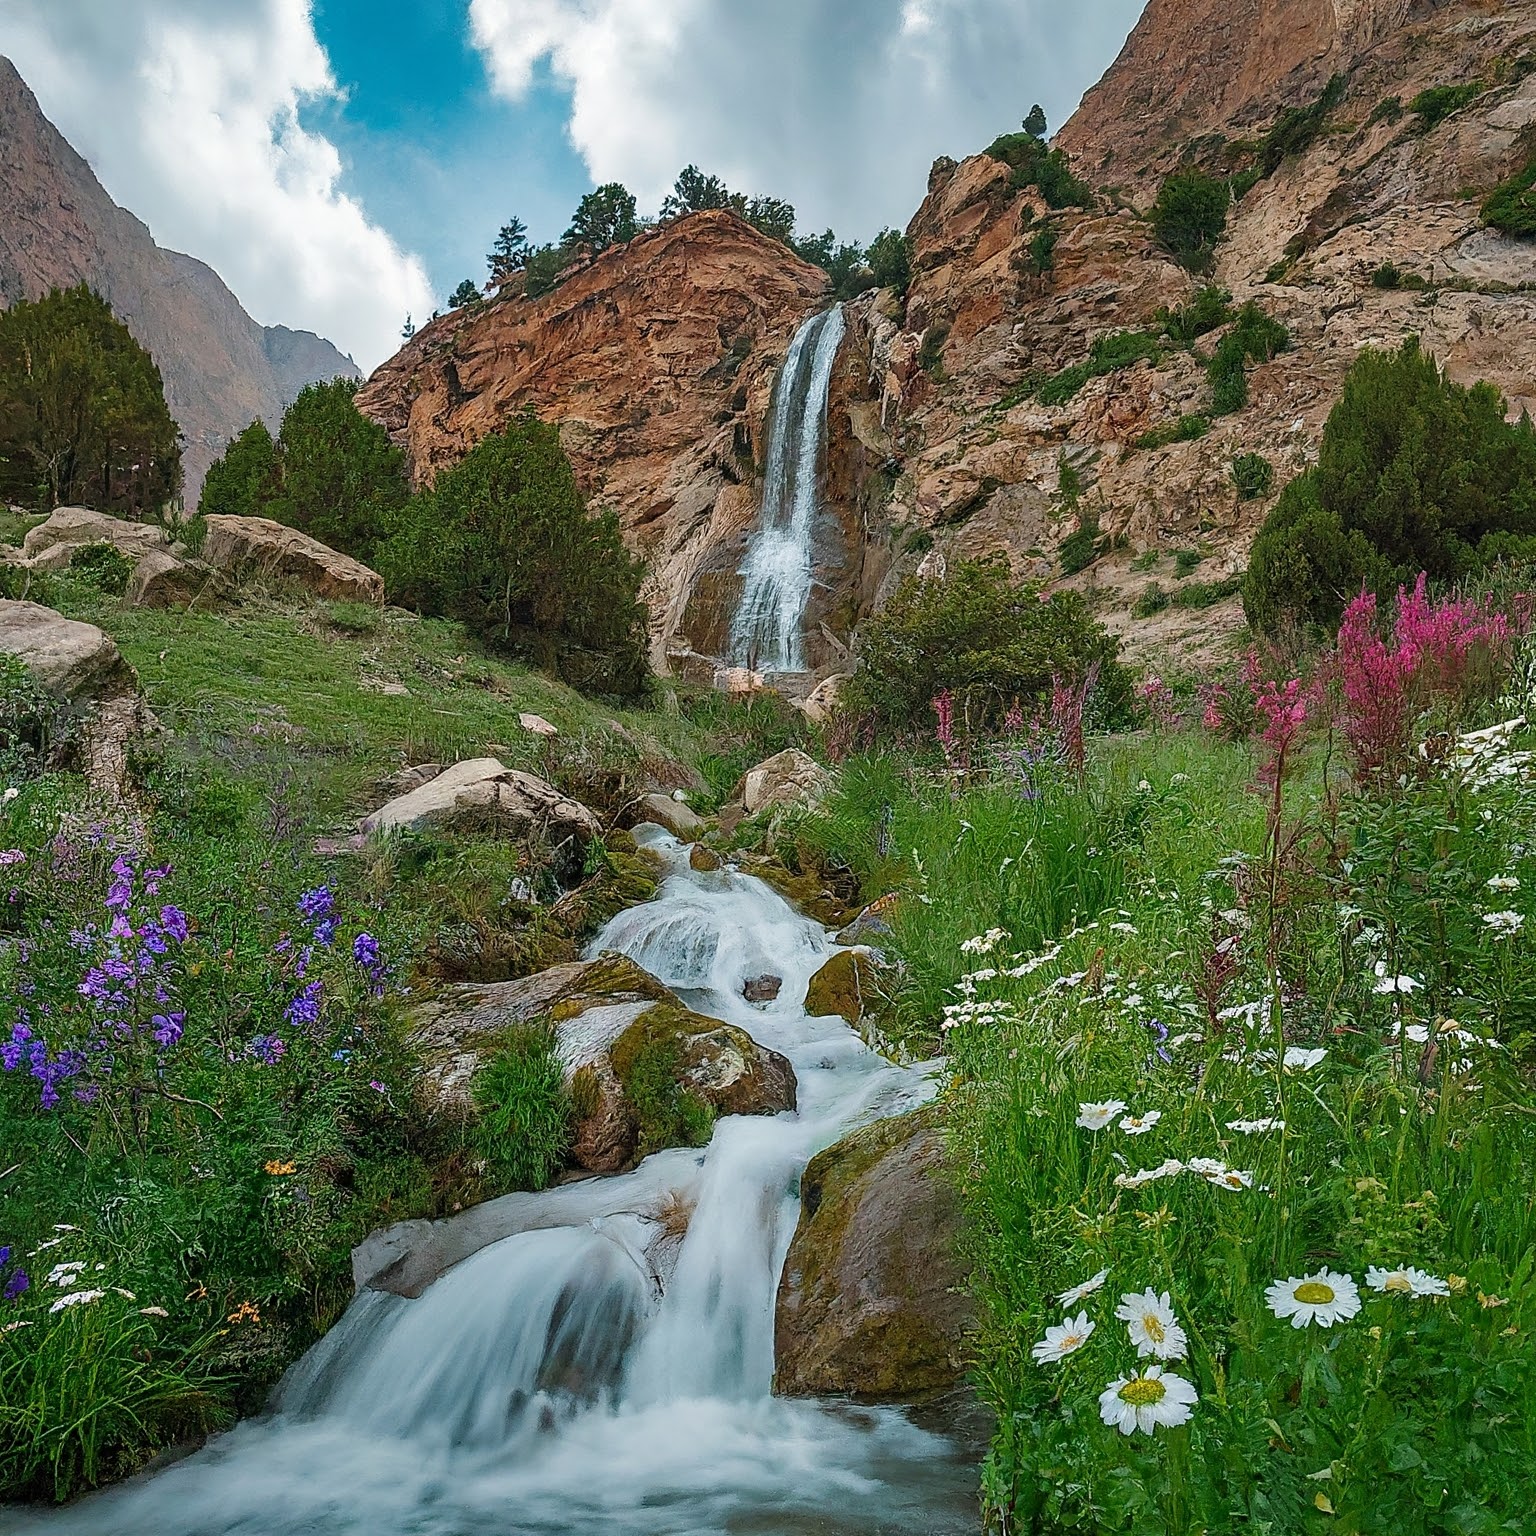 Waterfall cascading down a mountainside in Varzob, Tajikistan.